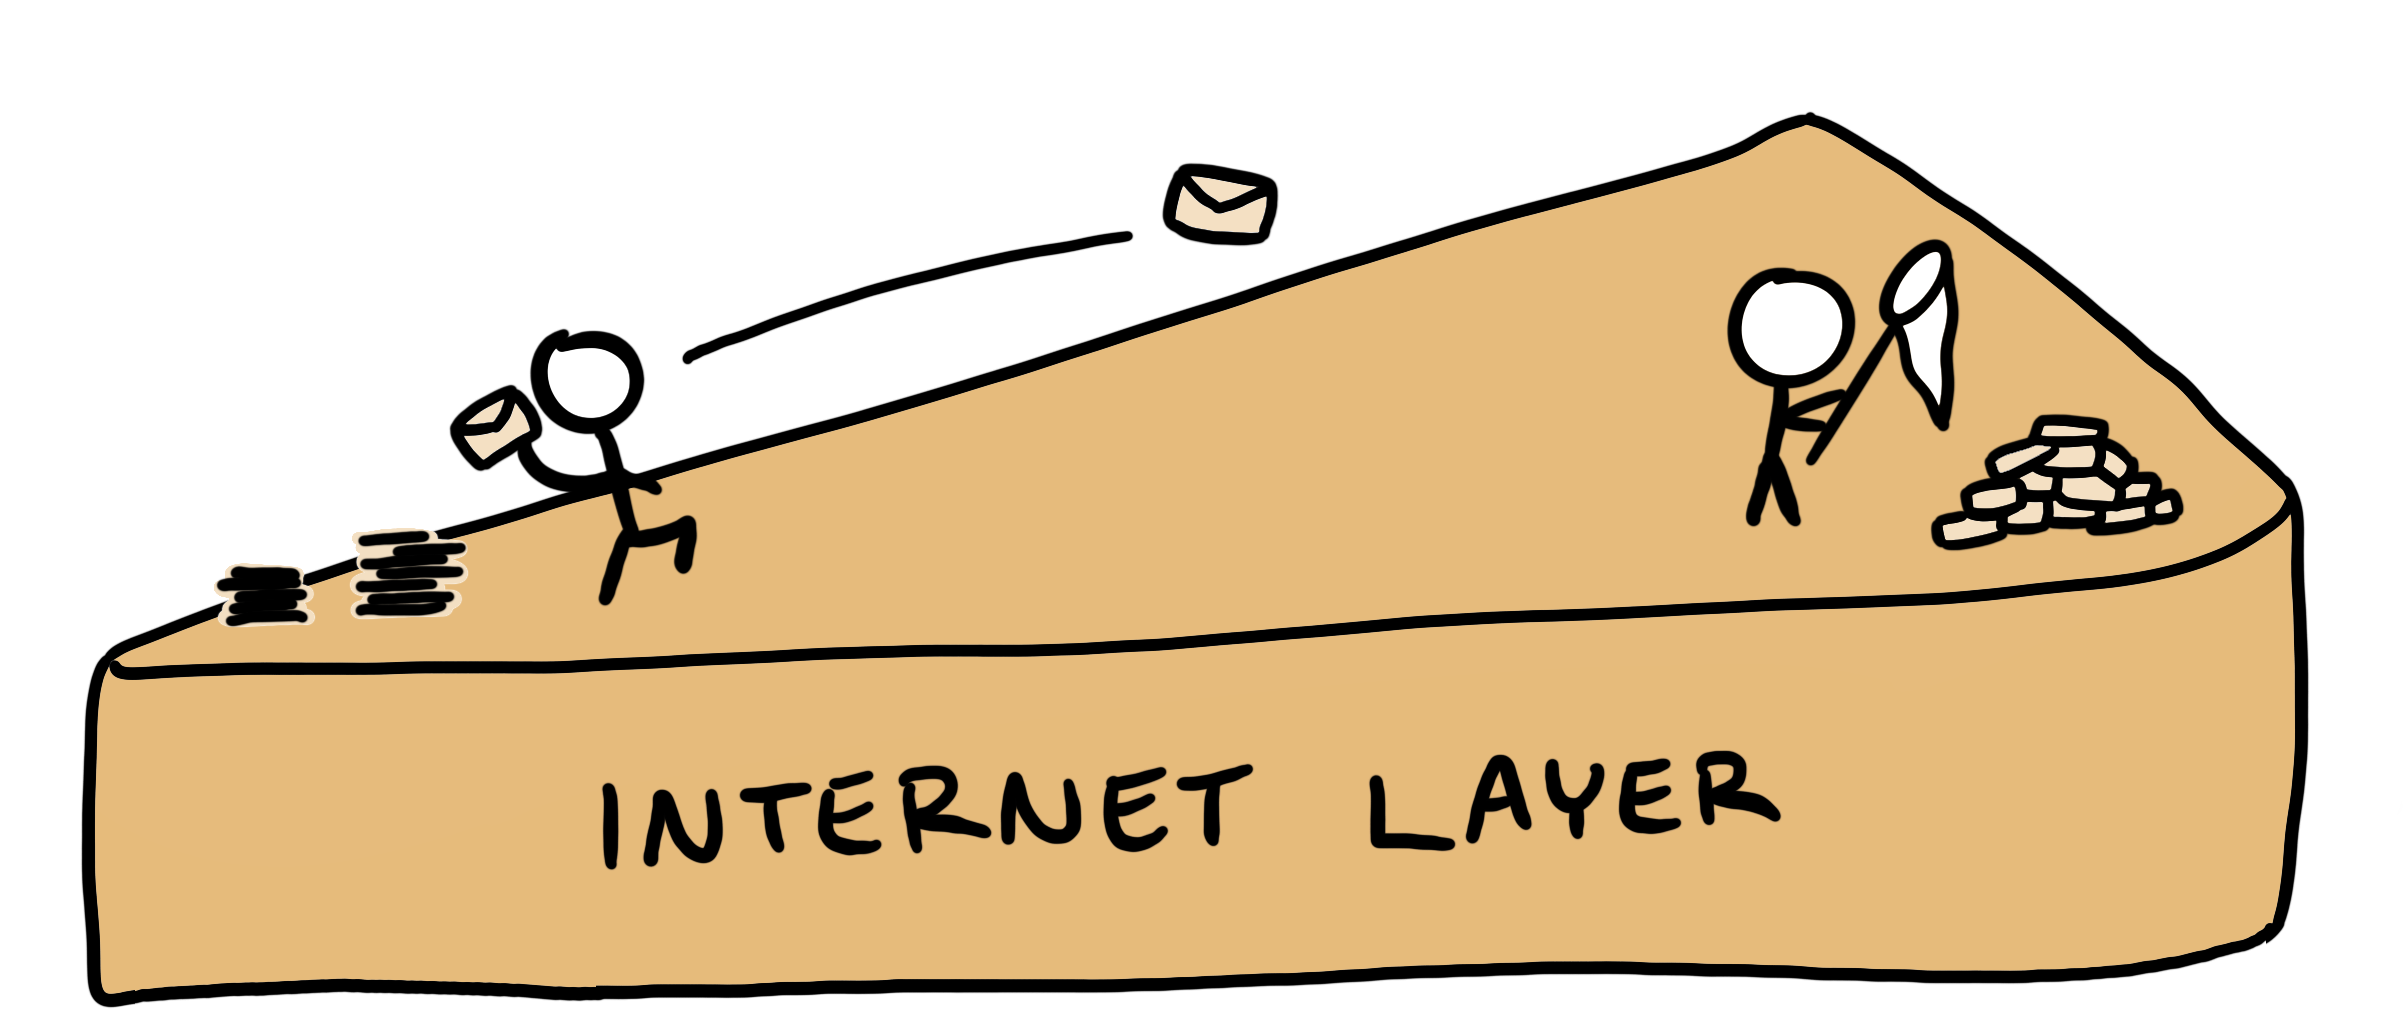 Internet cake layer cartoon